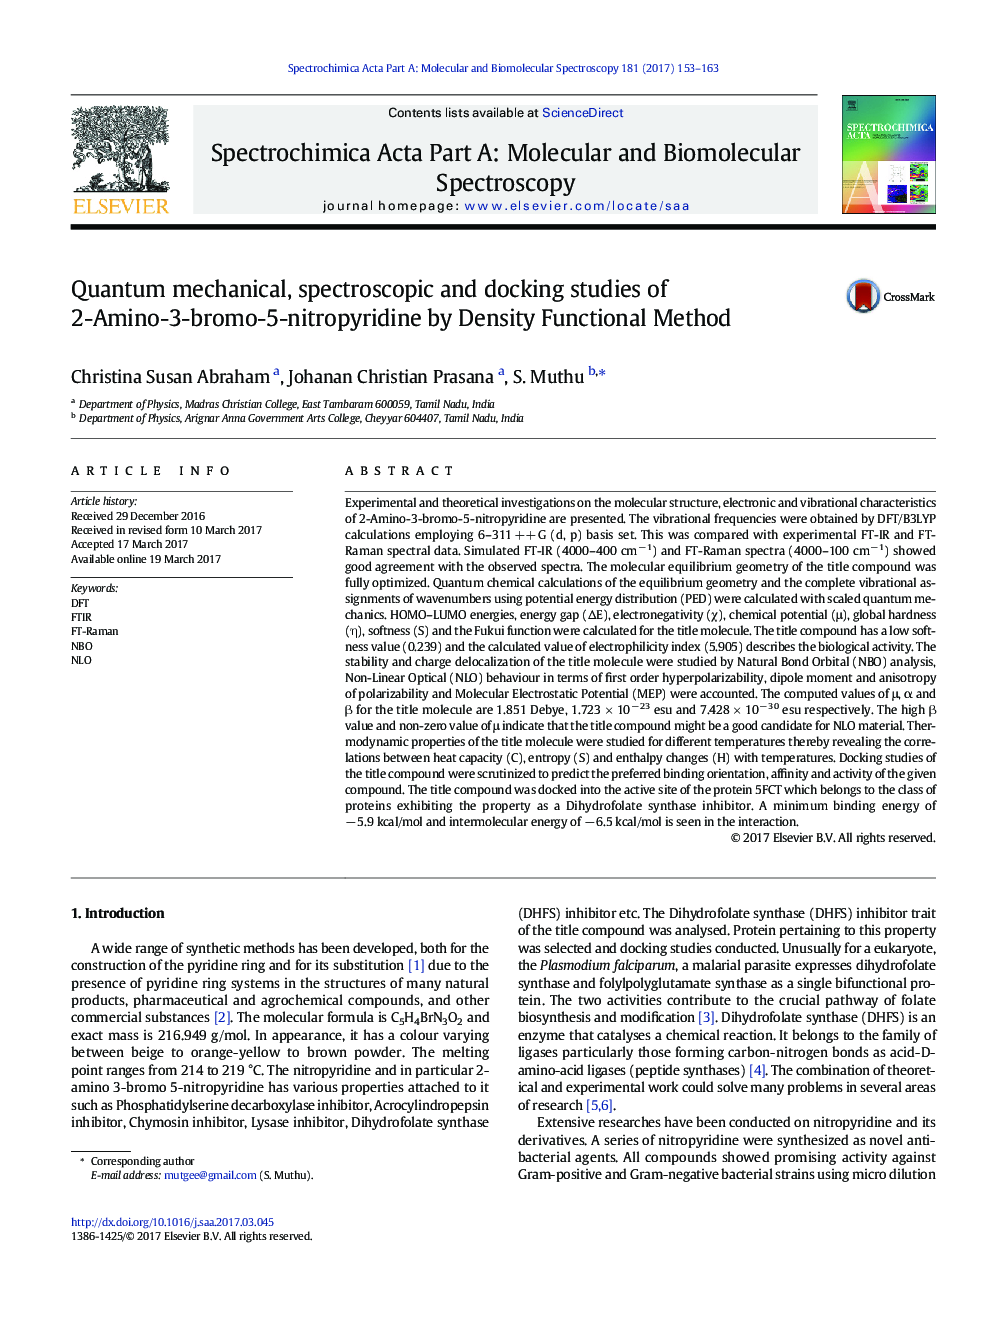 Quantum mechanical, spectroscopic and docking studies of 2-Amino-3-bromo-5-nitropyridine by Density Functional Method